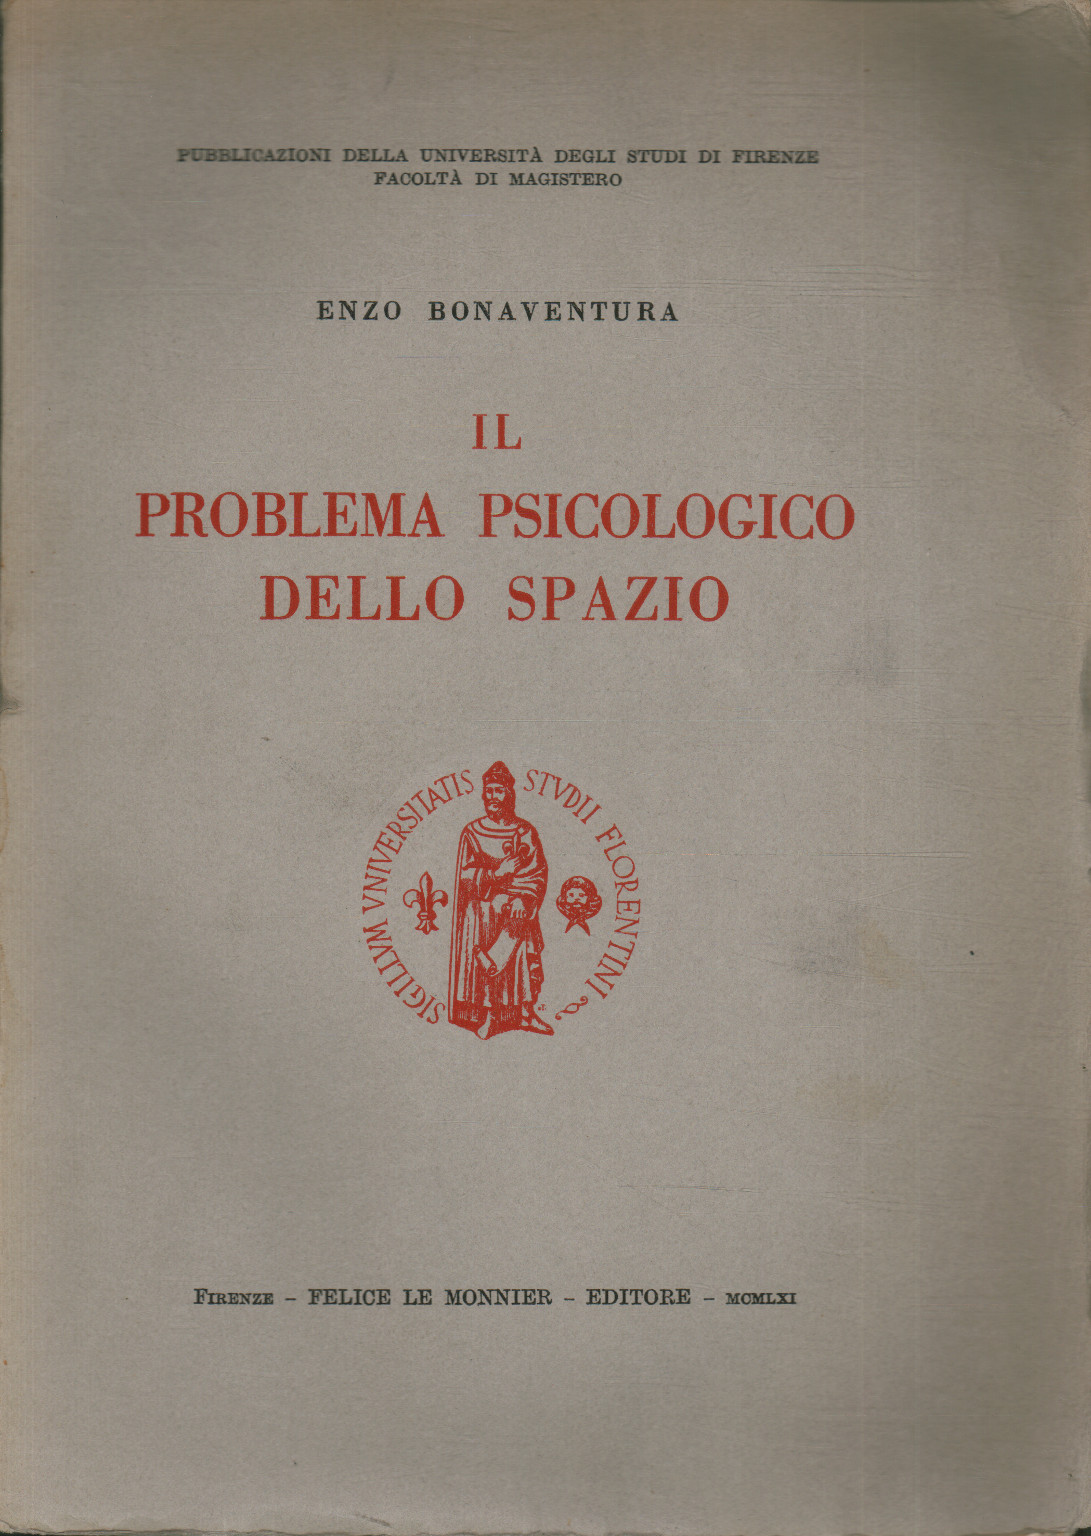 The psychological problem of space, Enzo Bonaventura